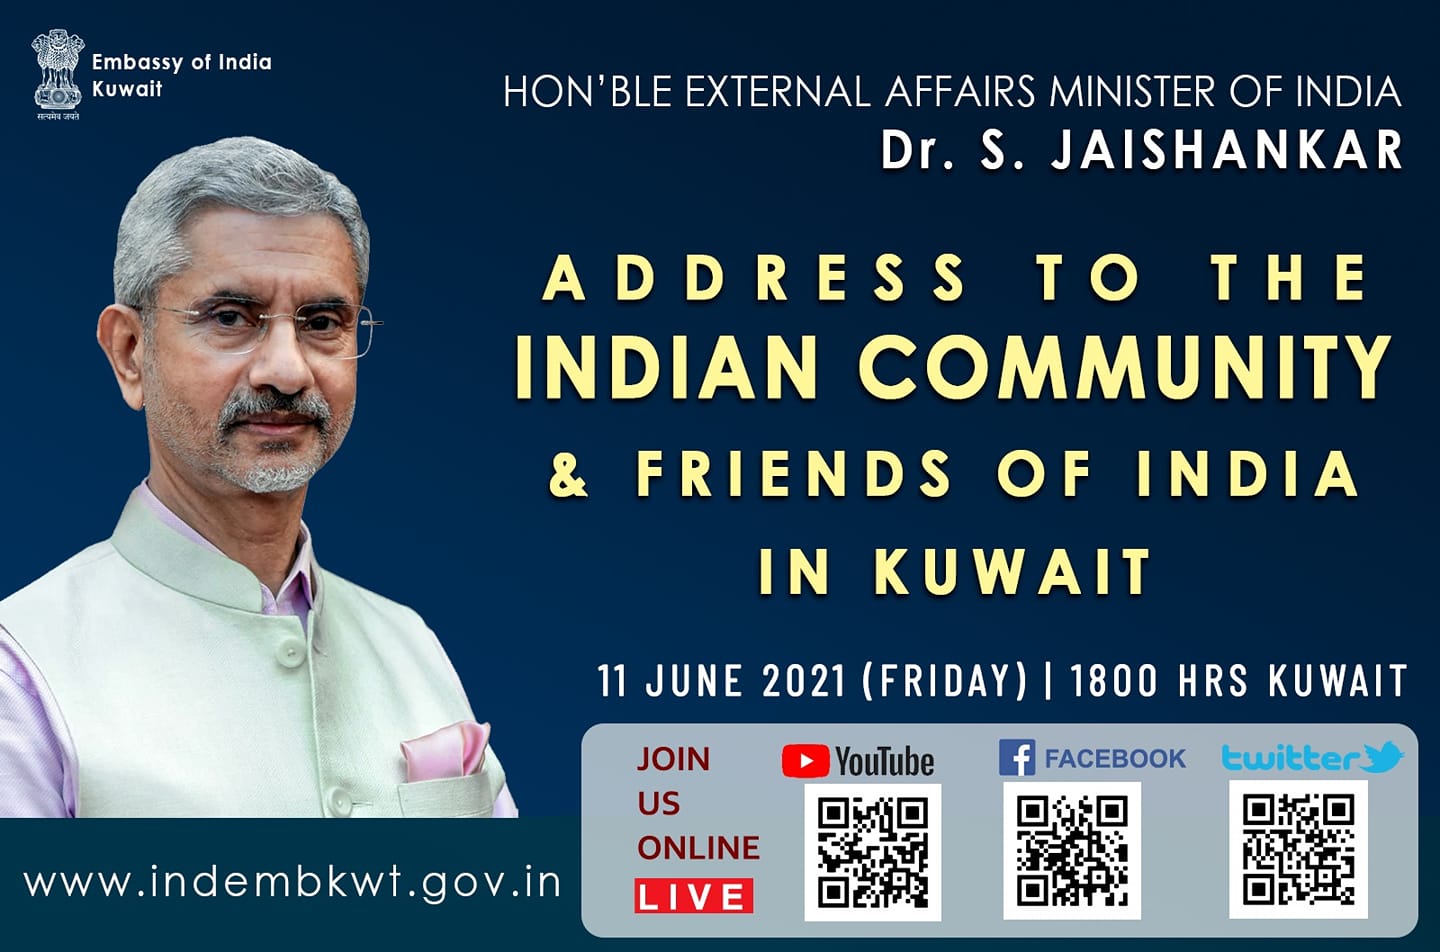 Minister Dr S Jaishankar to address the Indian community on Friday